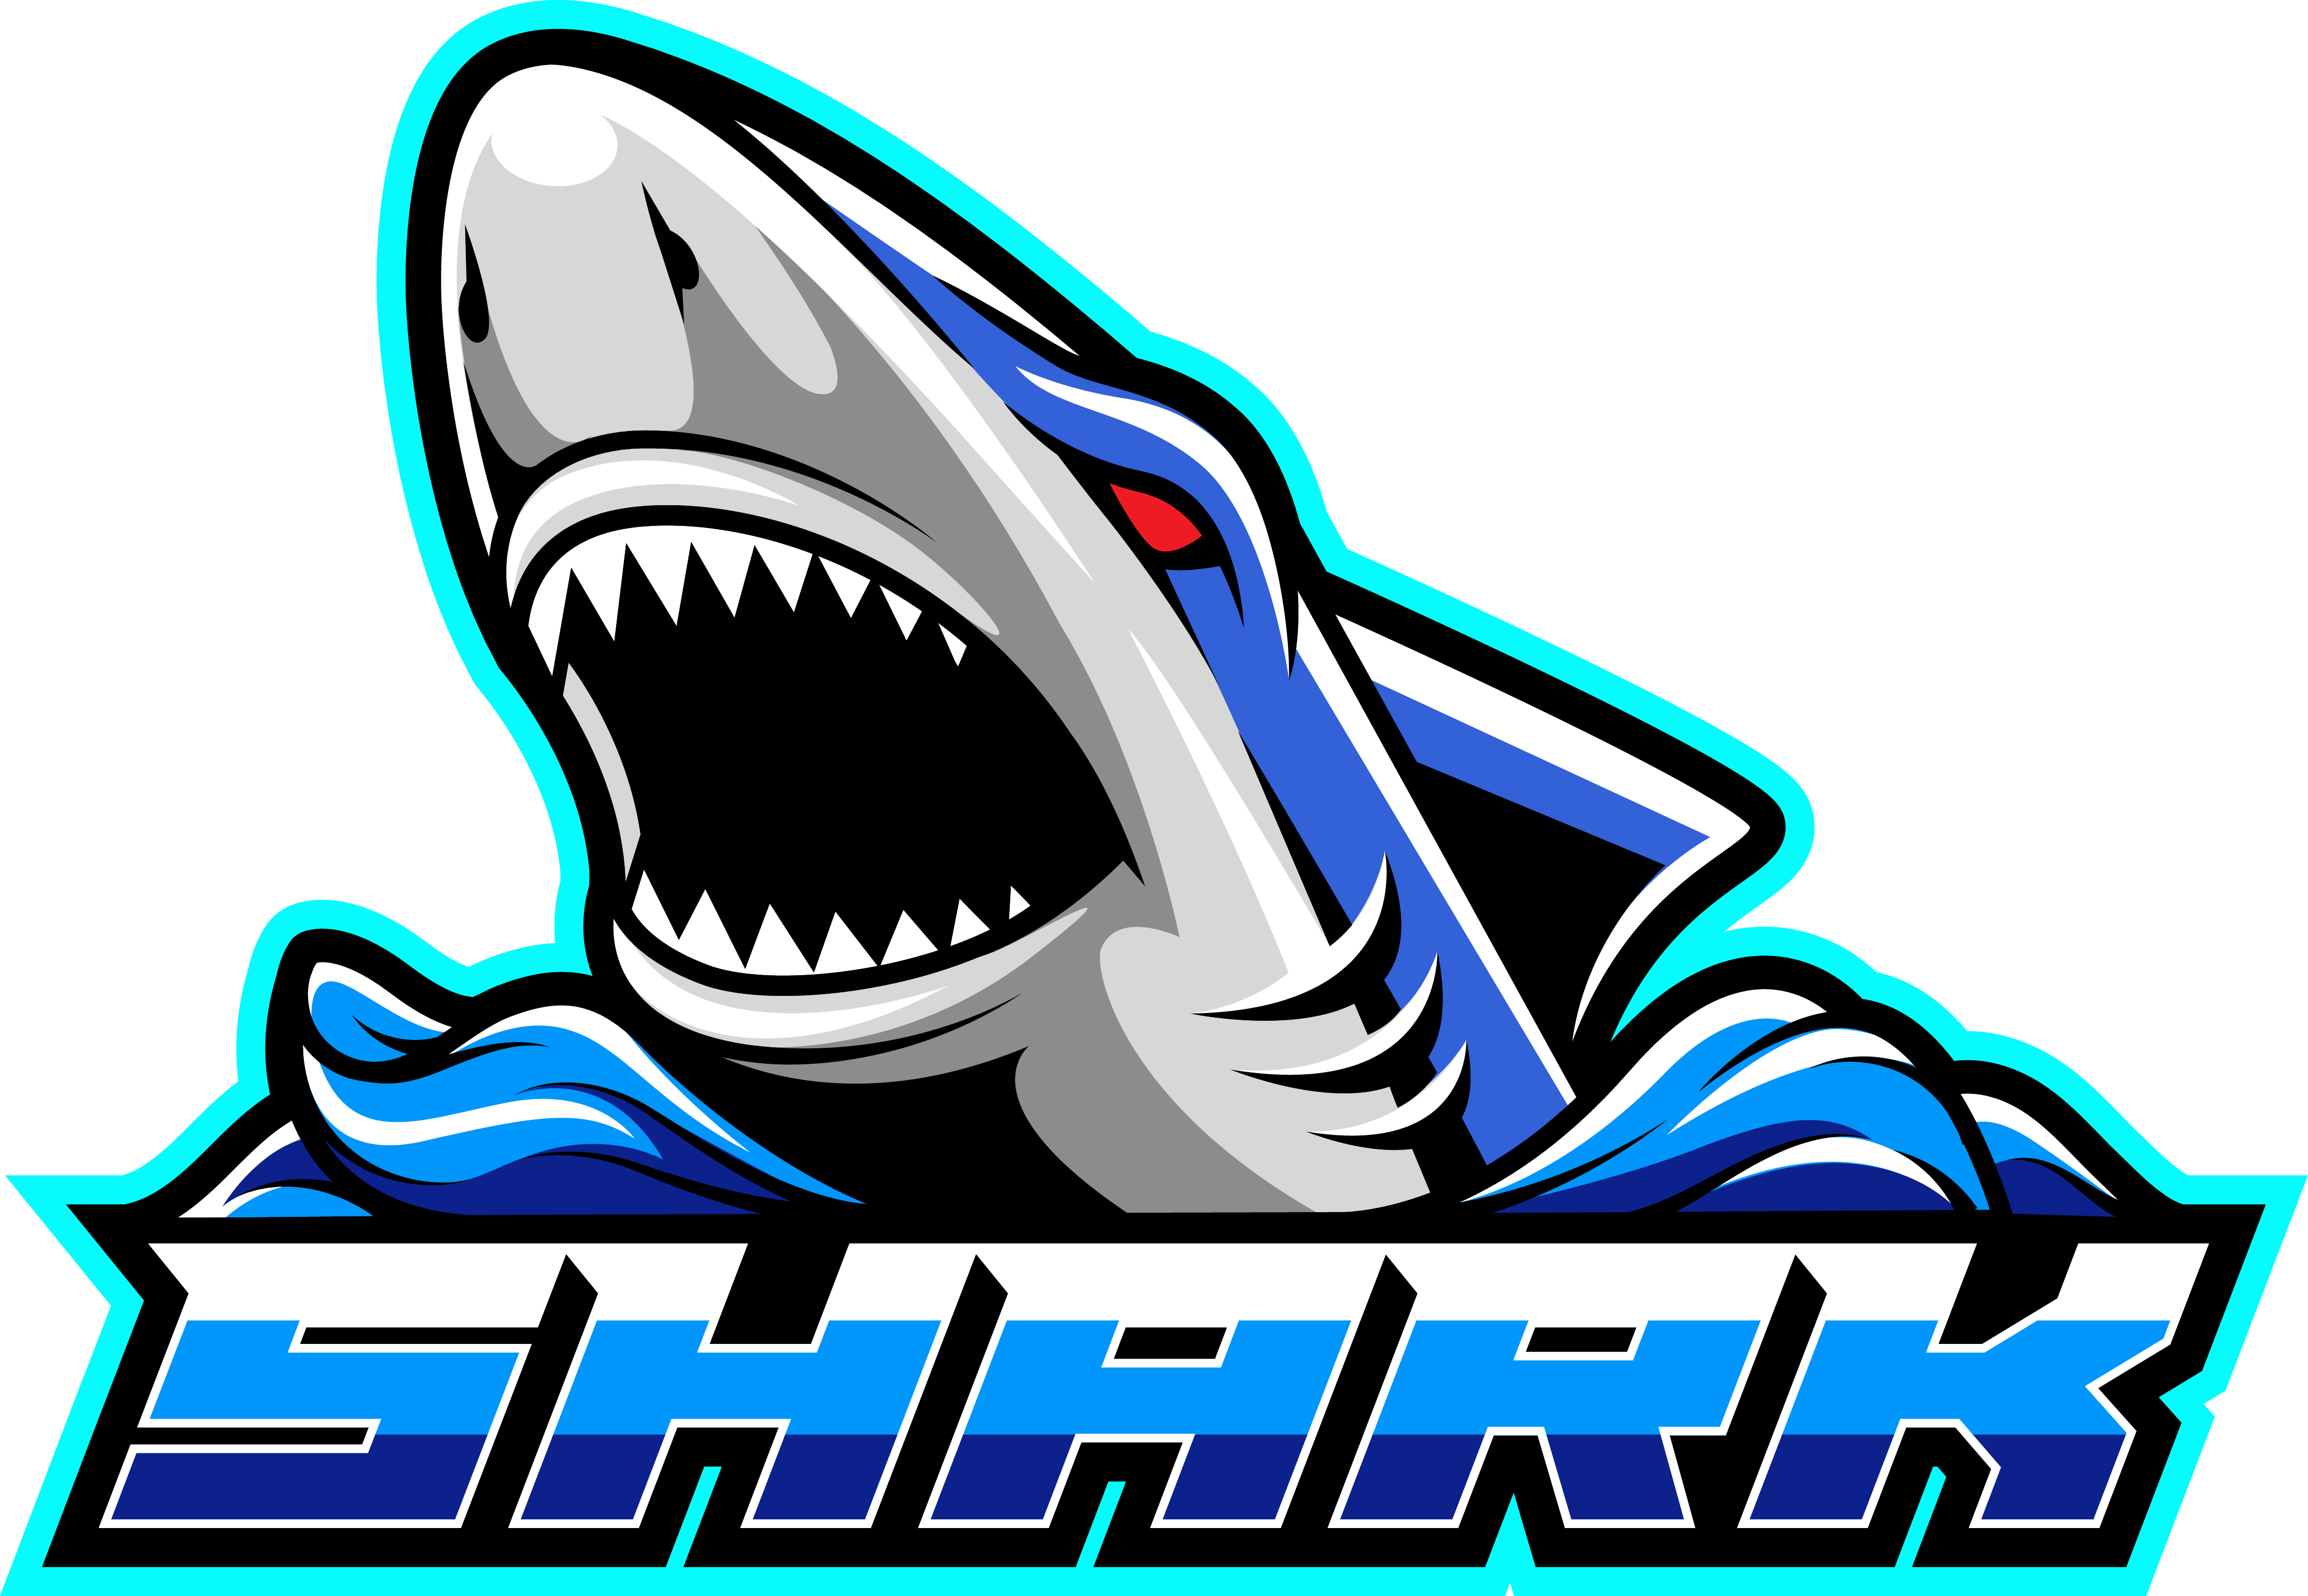 Shark esport mascot logo design By Visink - TheHungryJPEG.com